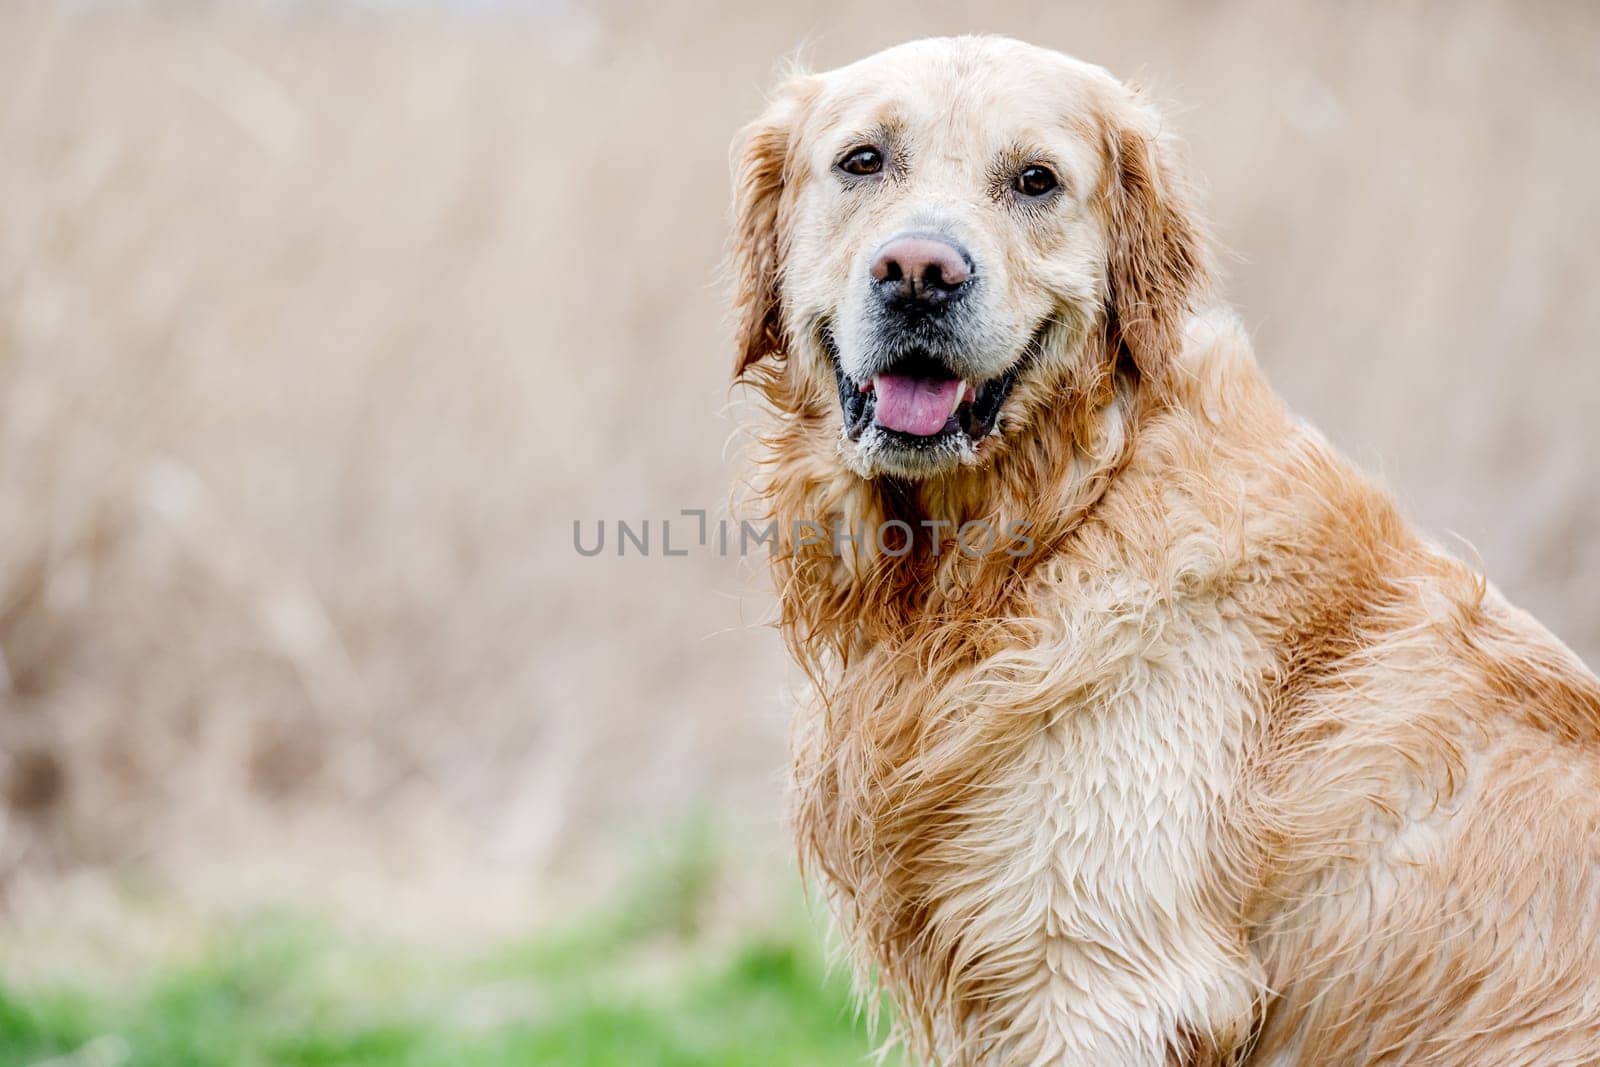 Dog golden retriever breed outdoors by GekaSkr